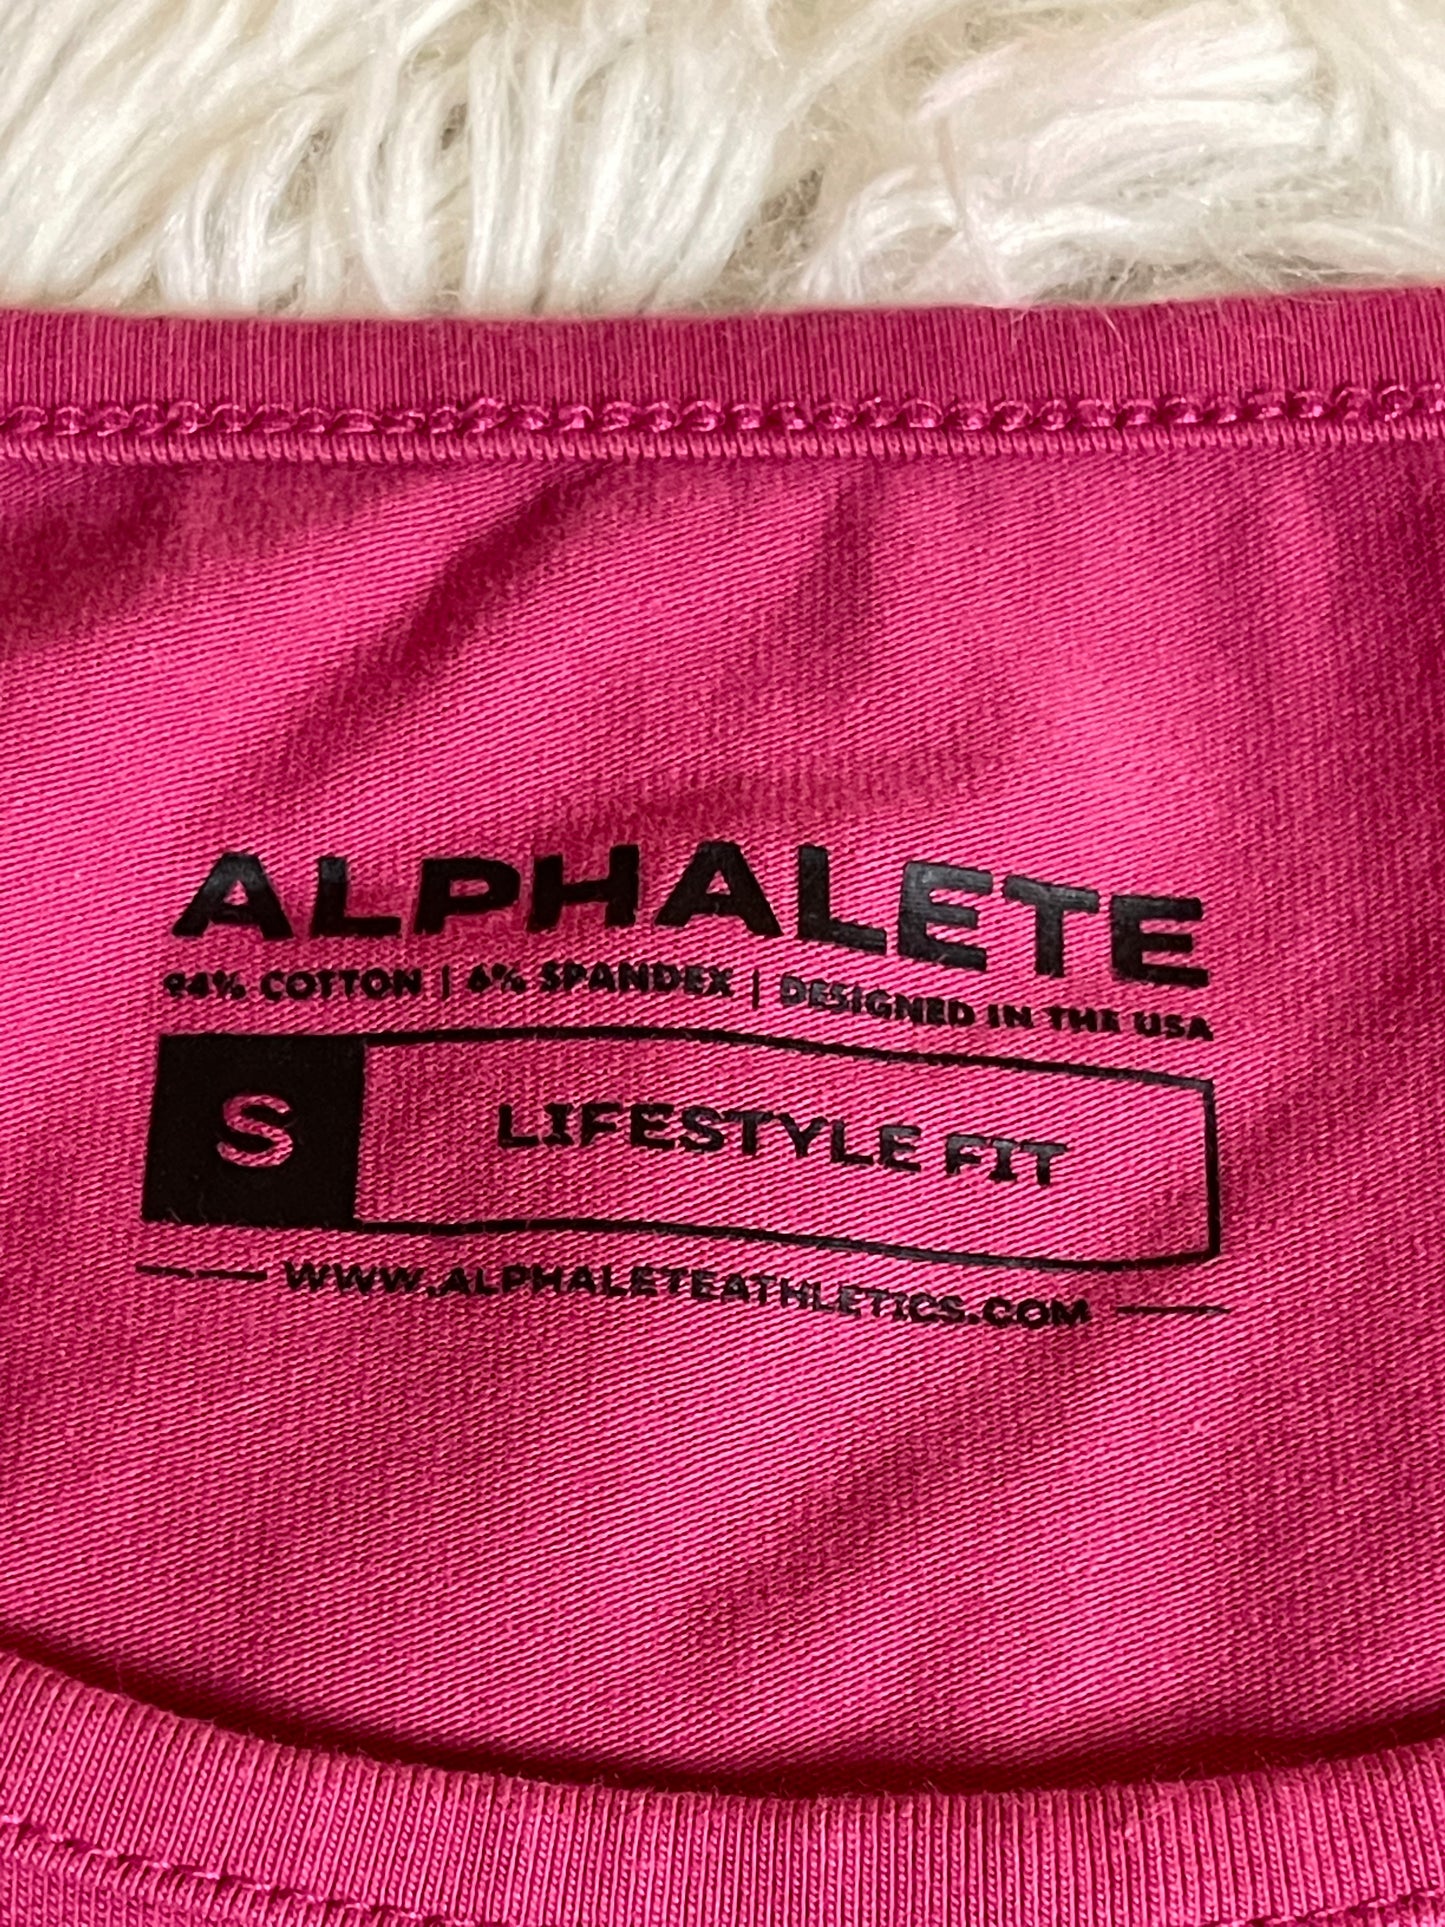 Alphalete Men's Long Sleeve Top Pink - Size Small